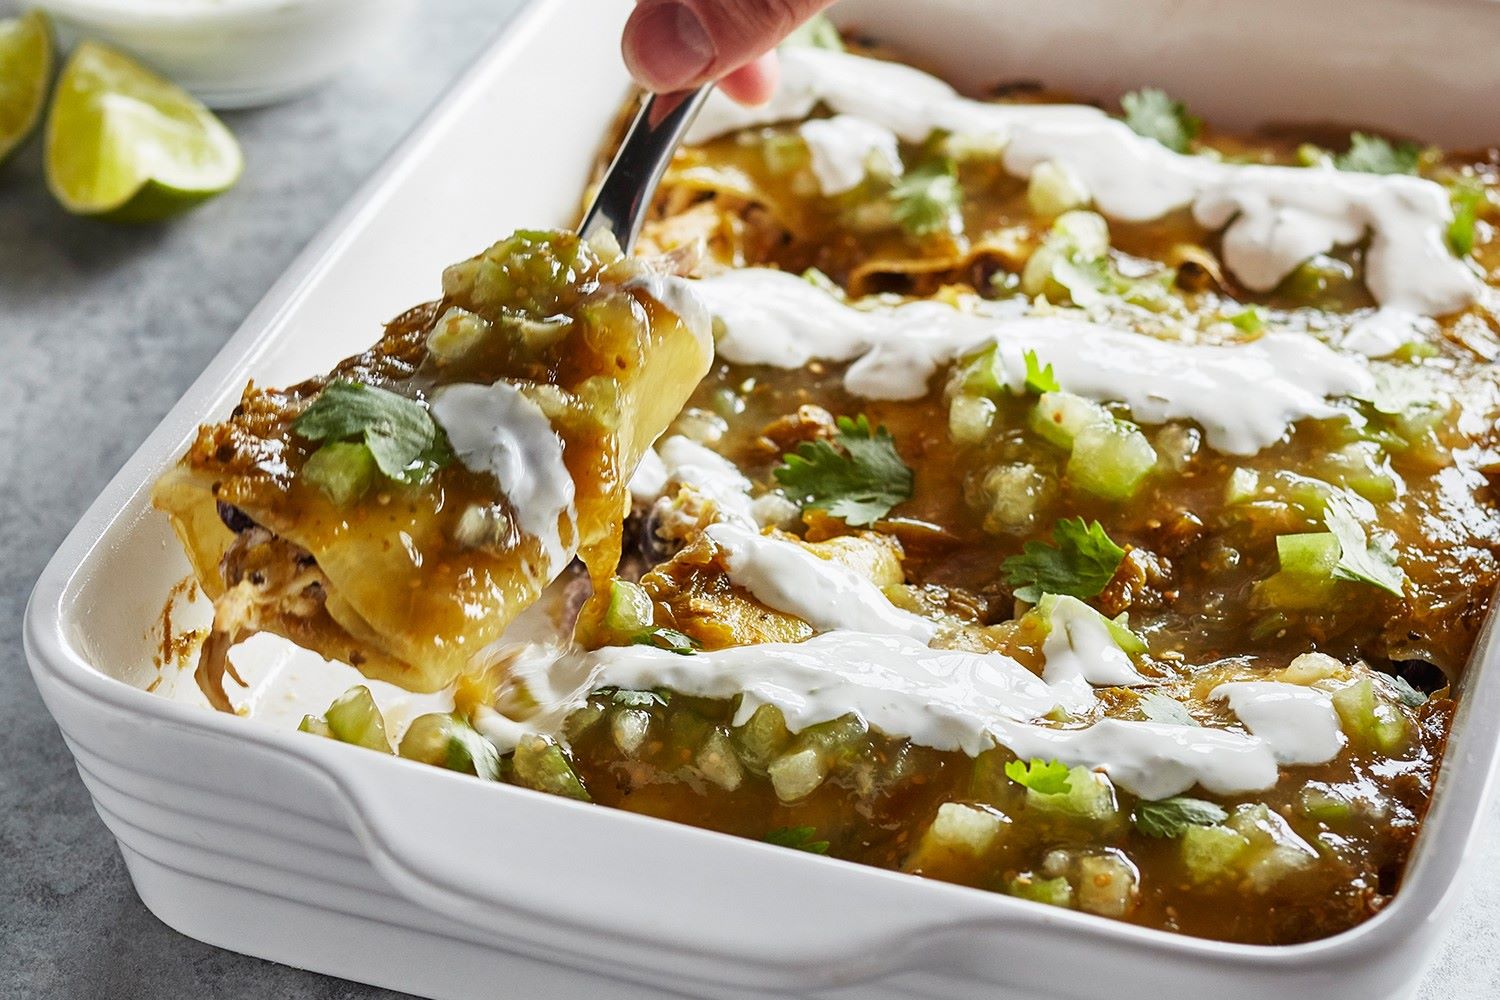 potato recipes to try, chicken enchiladas recipe